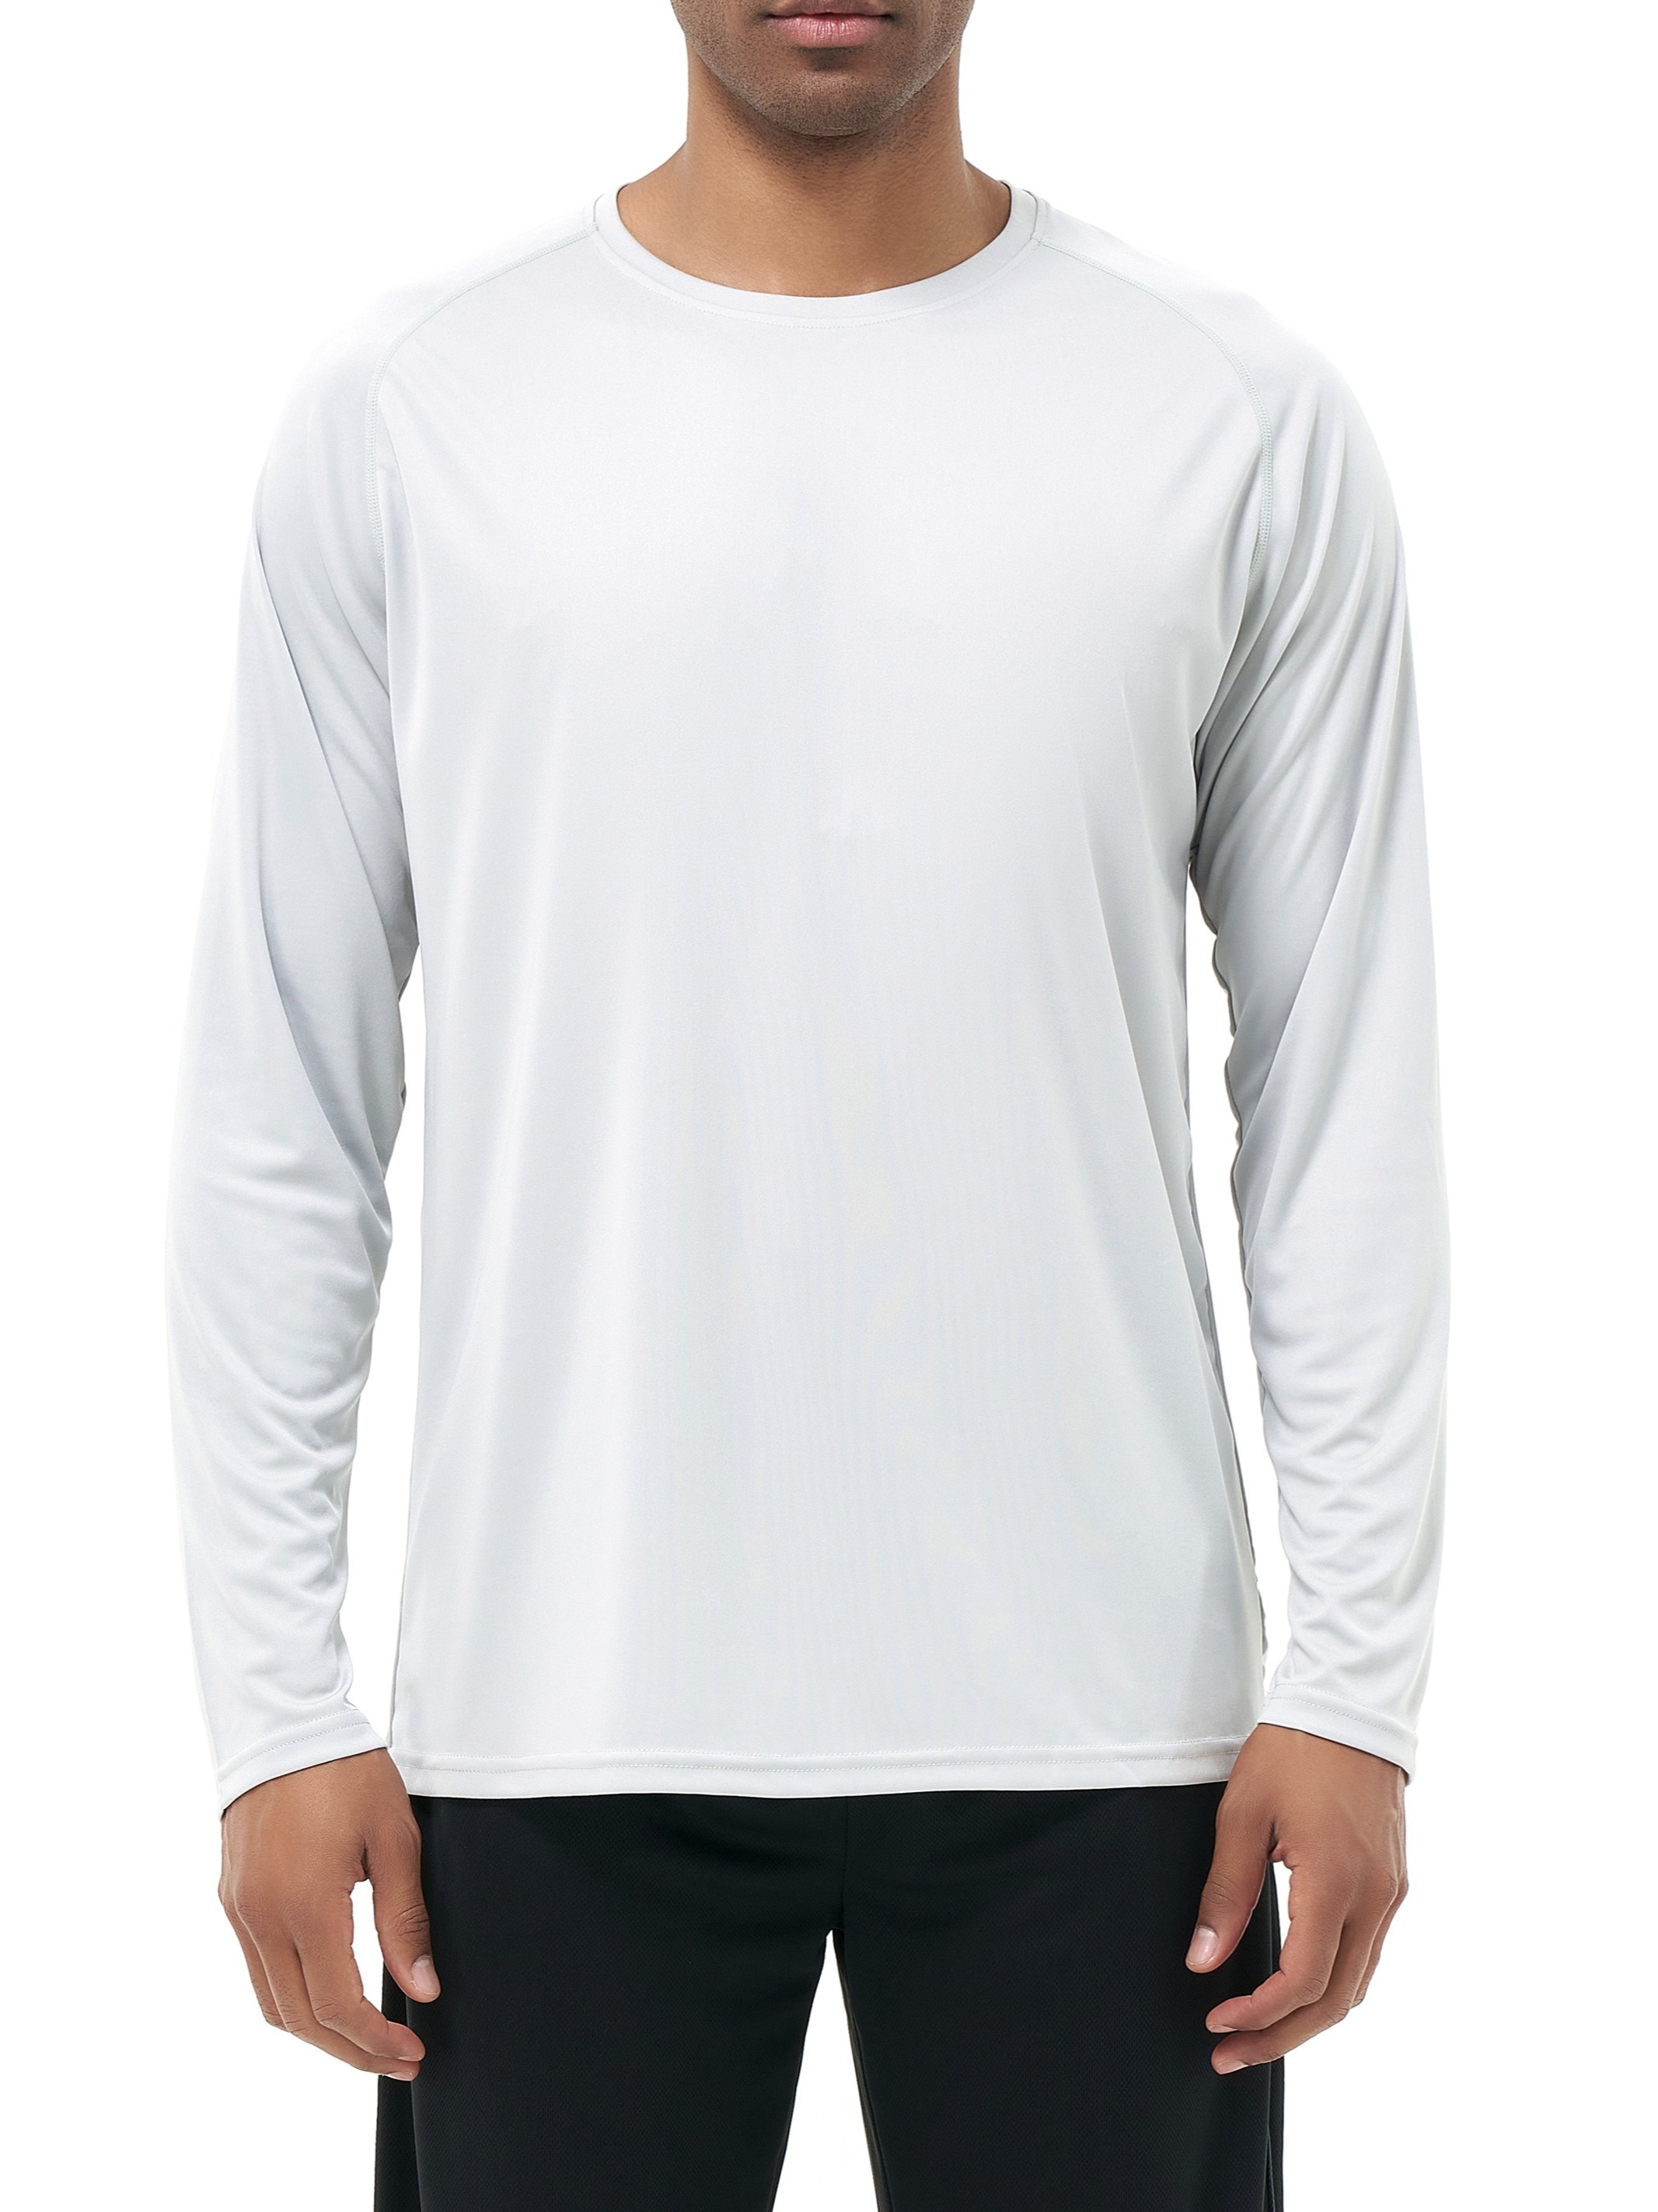 Men's Lightweight UPF 50+ Sun Protection T-Shirts Long Sleeve Shirts For  Fishing Hiking Running